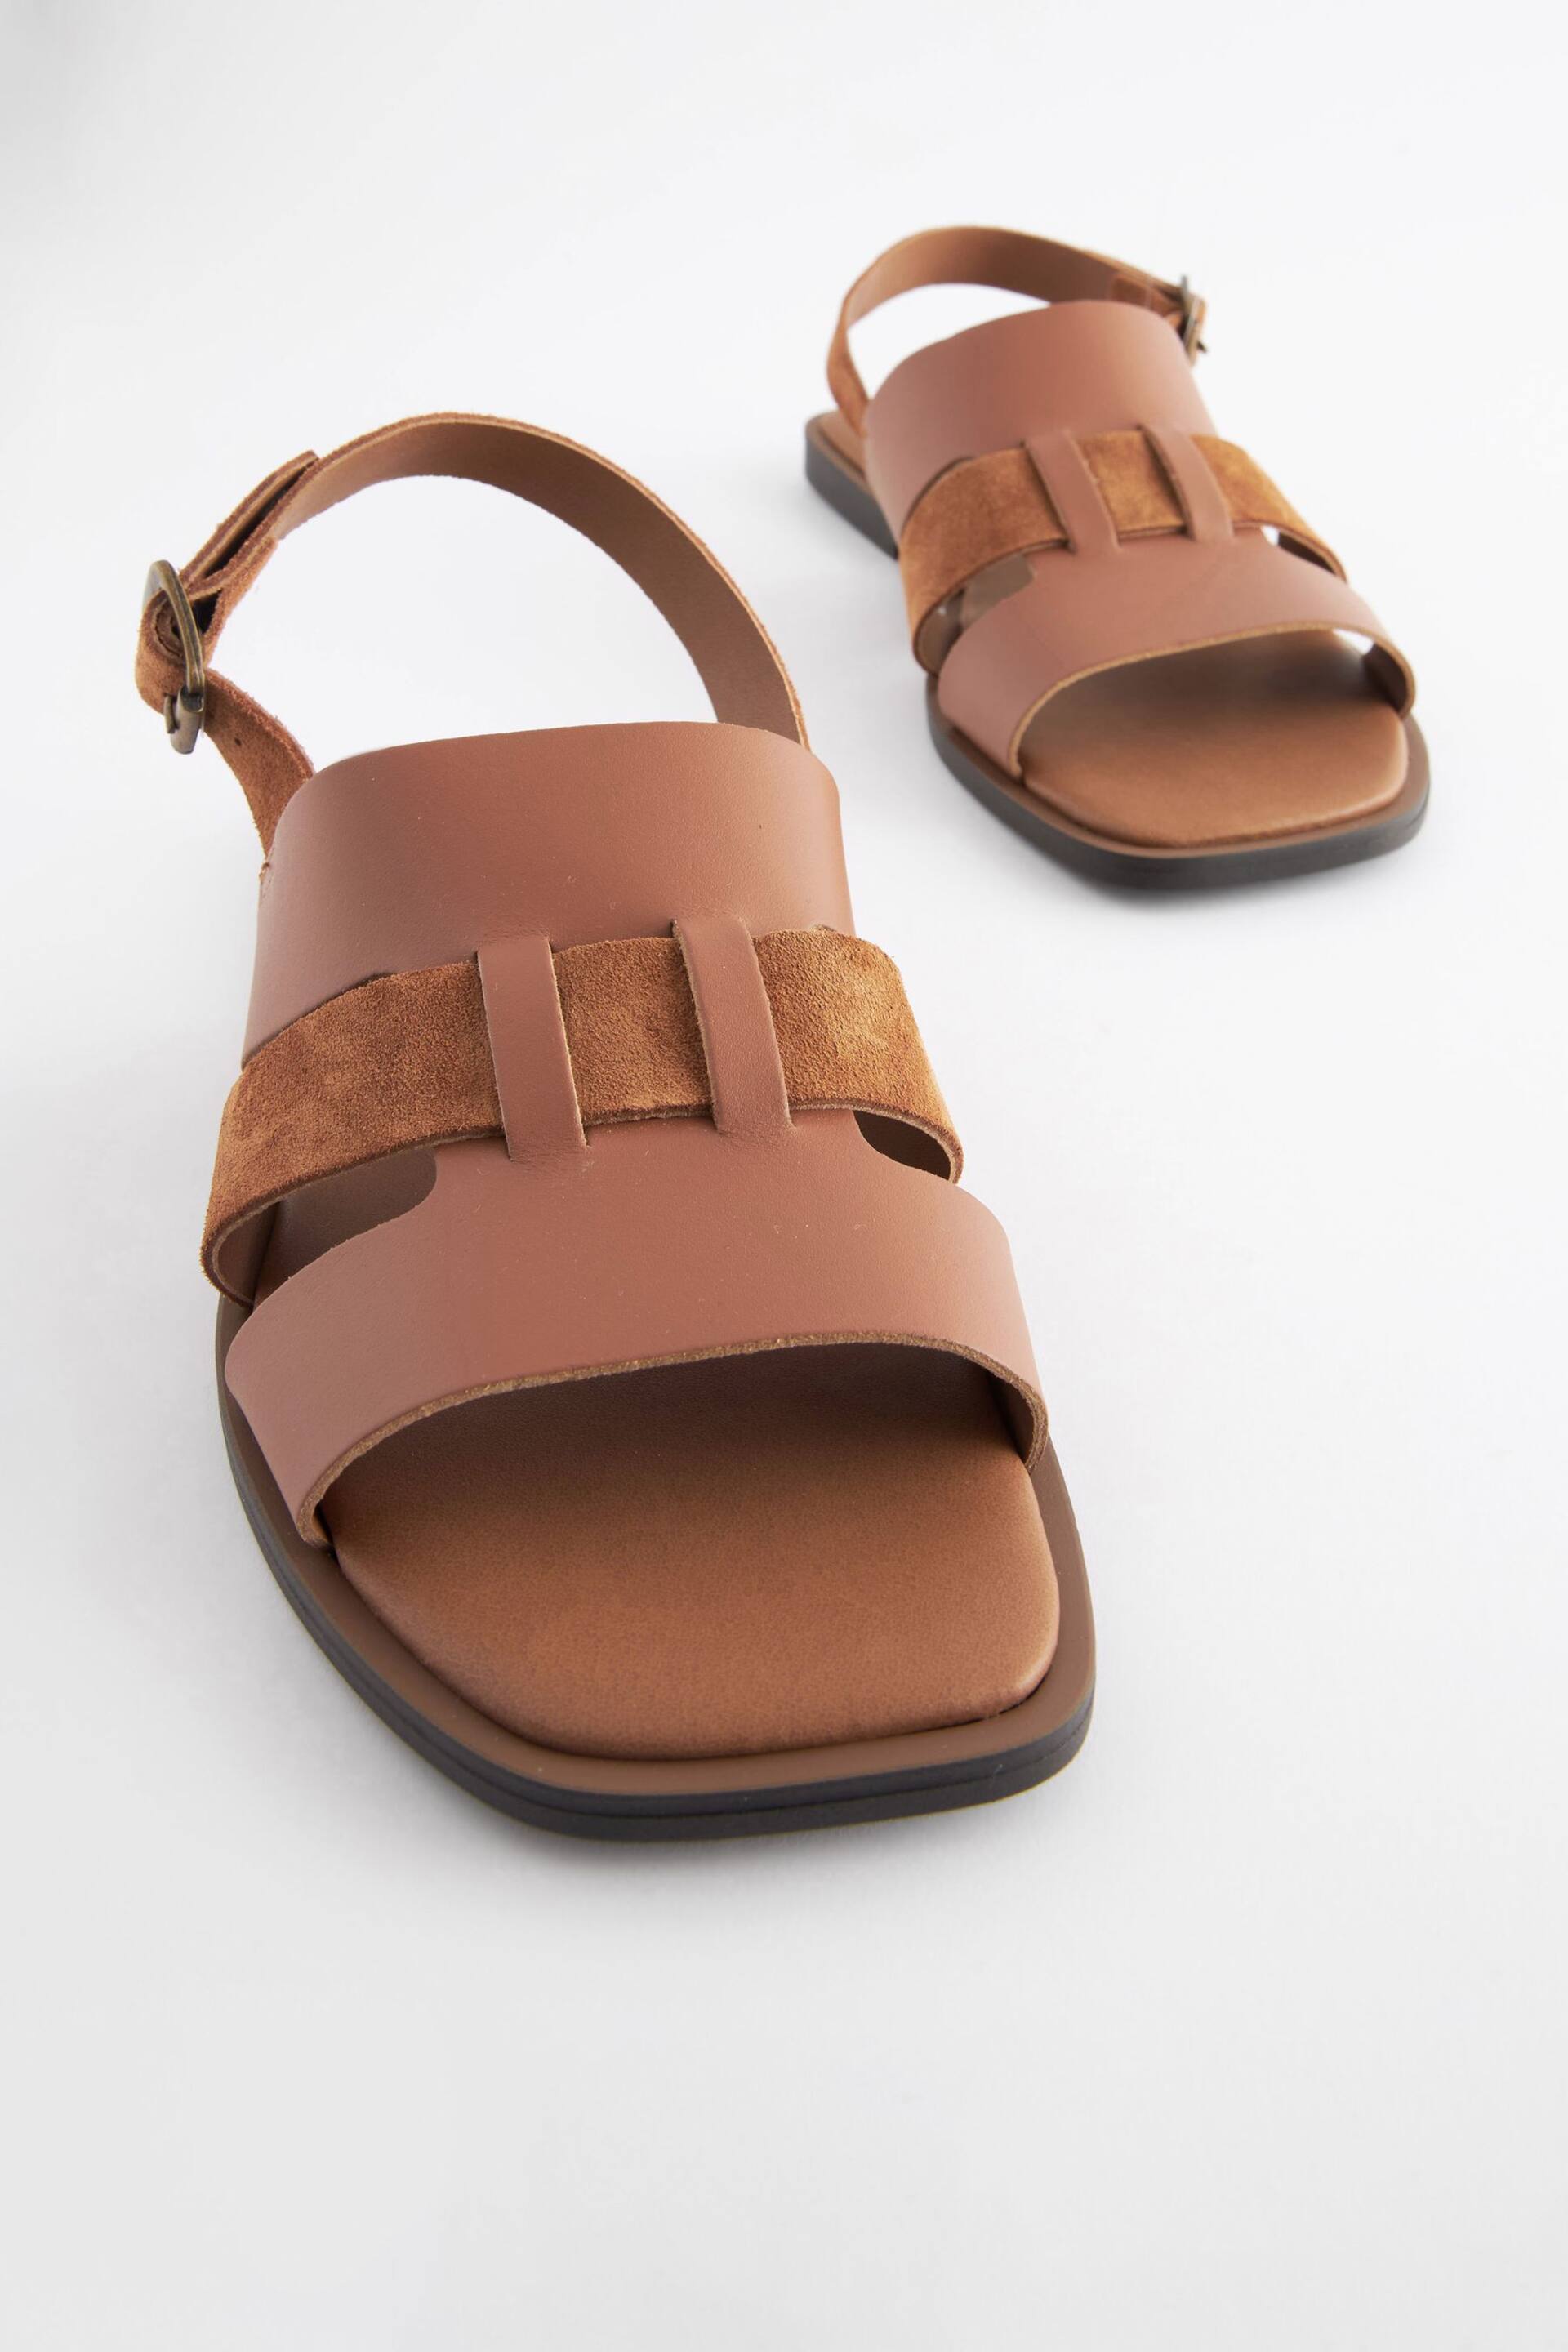 Tan Brown Regular/Wide Fit Forever Comfort® Leather Slingback Sandals - Image 3 of 5